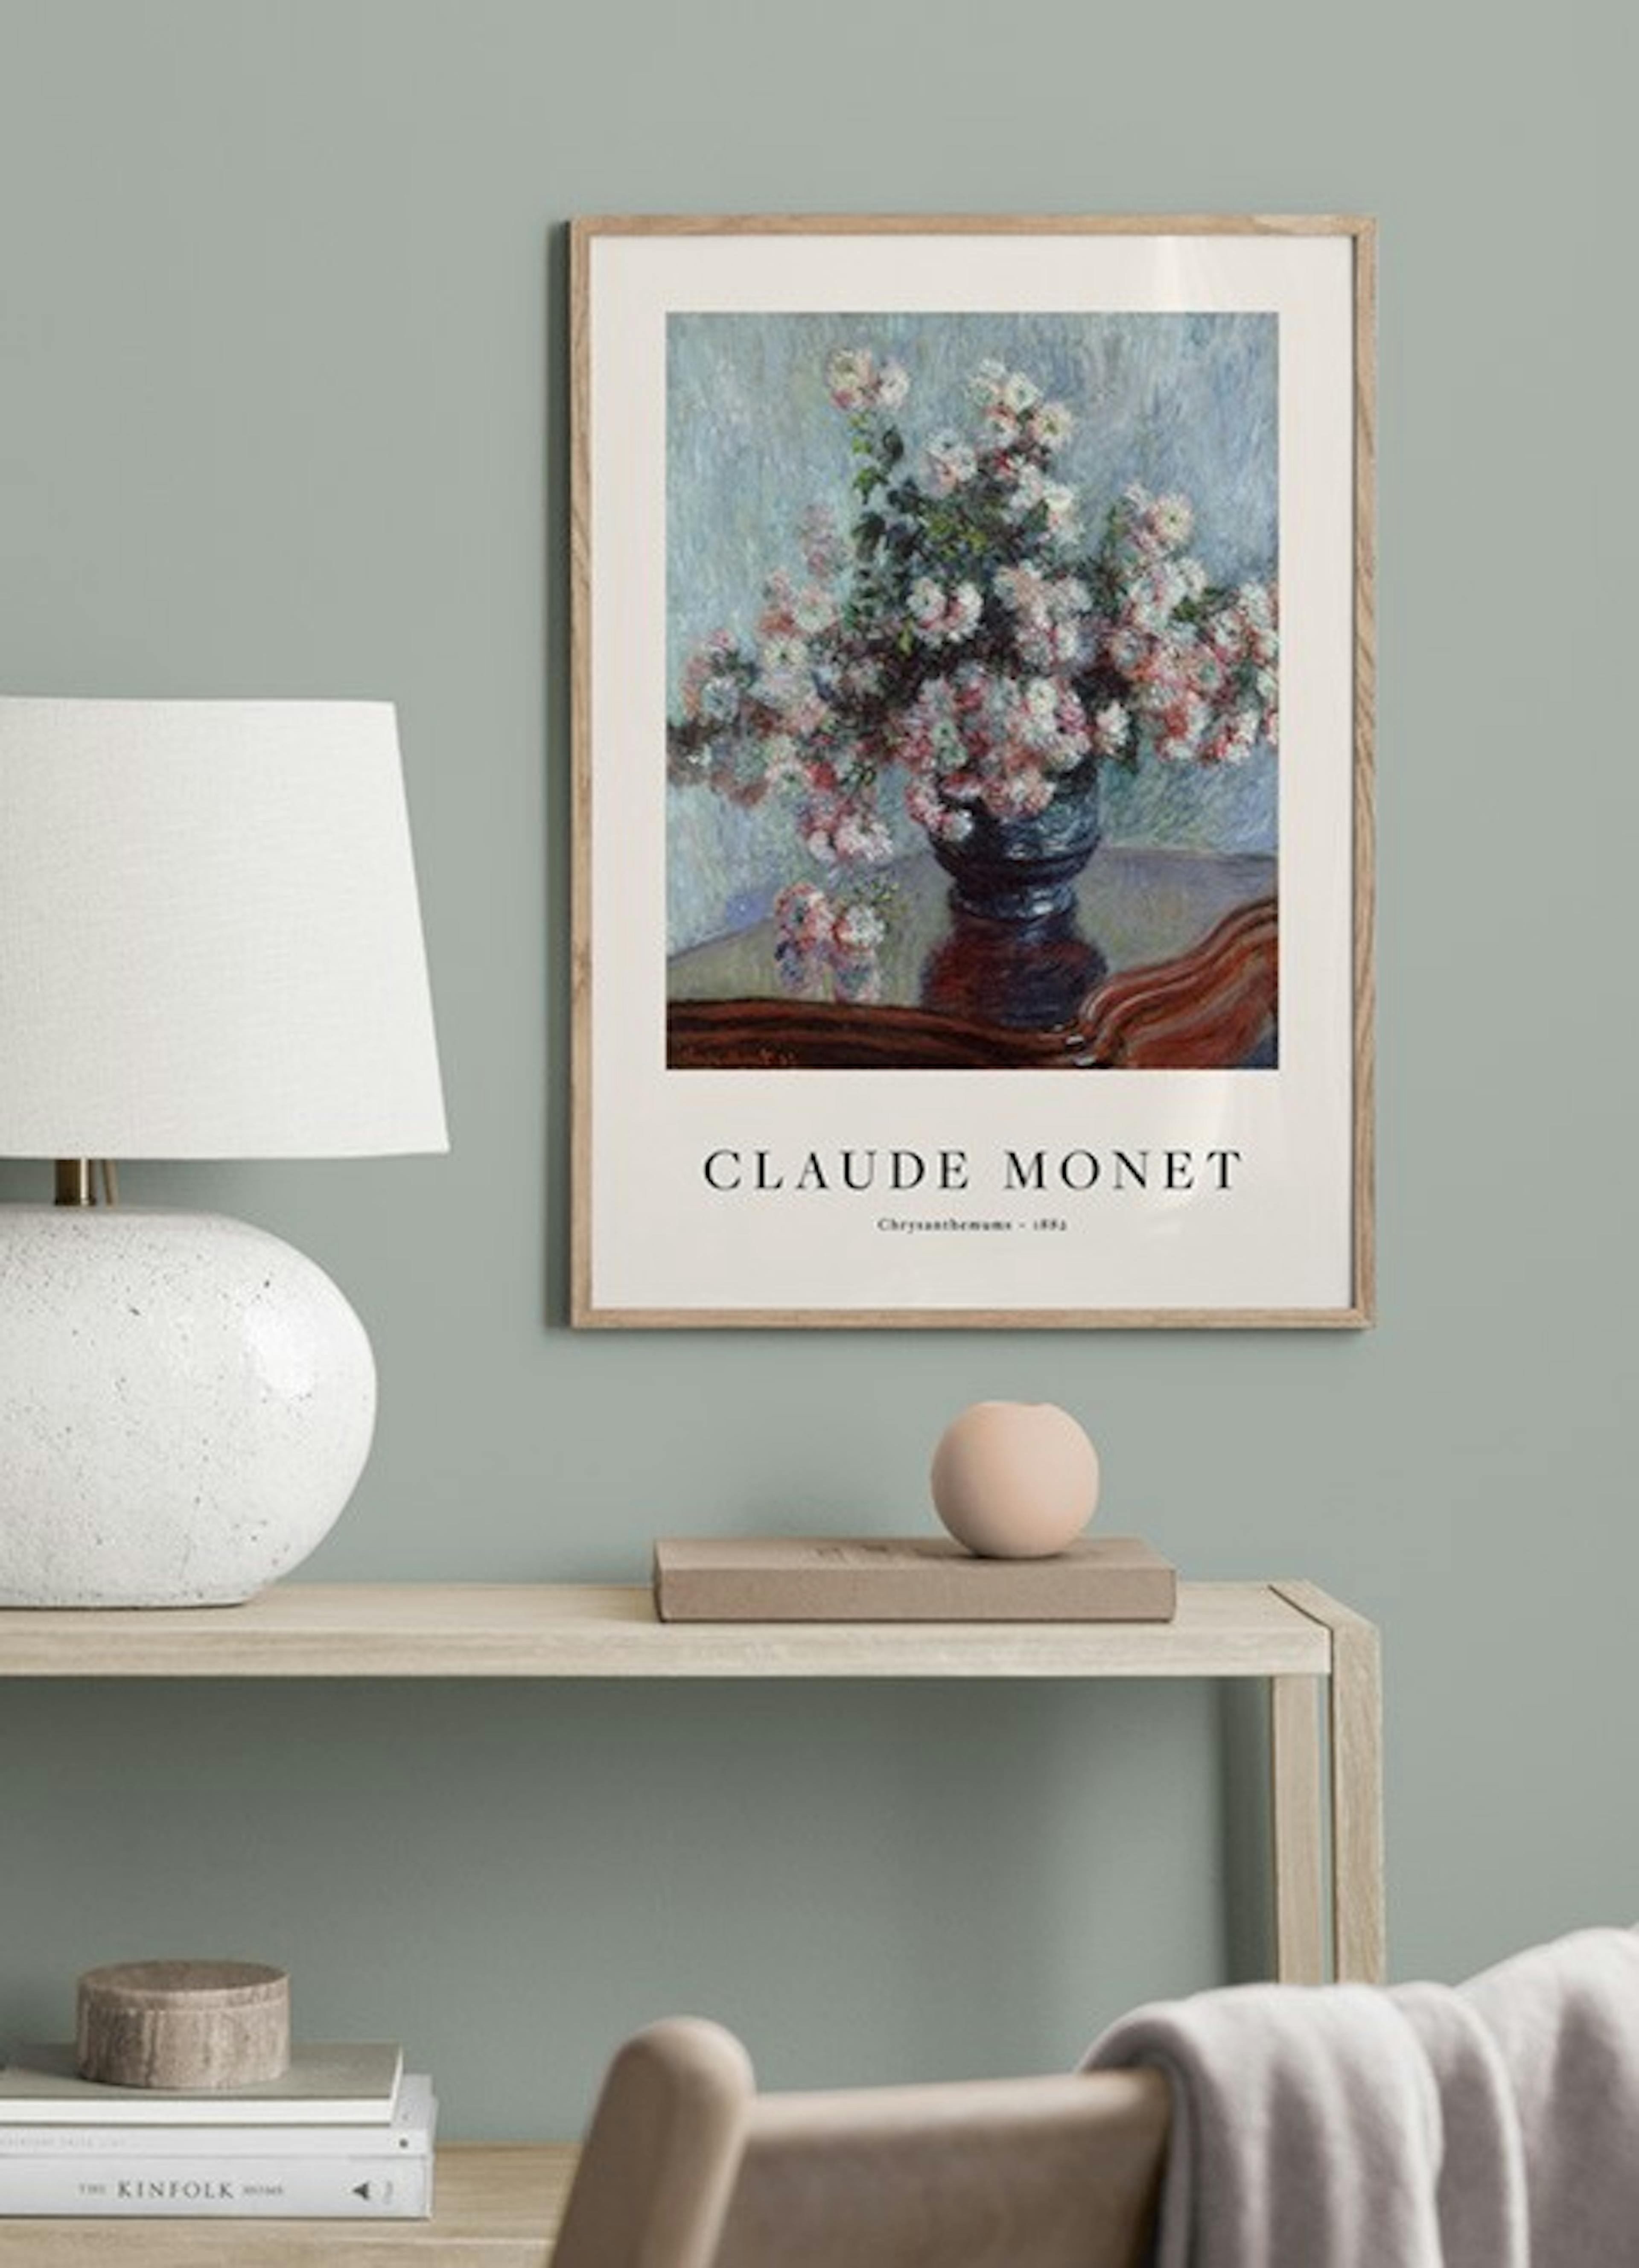 Monet - Chrysanthemums Poster